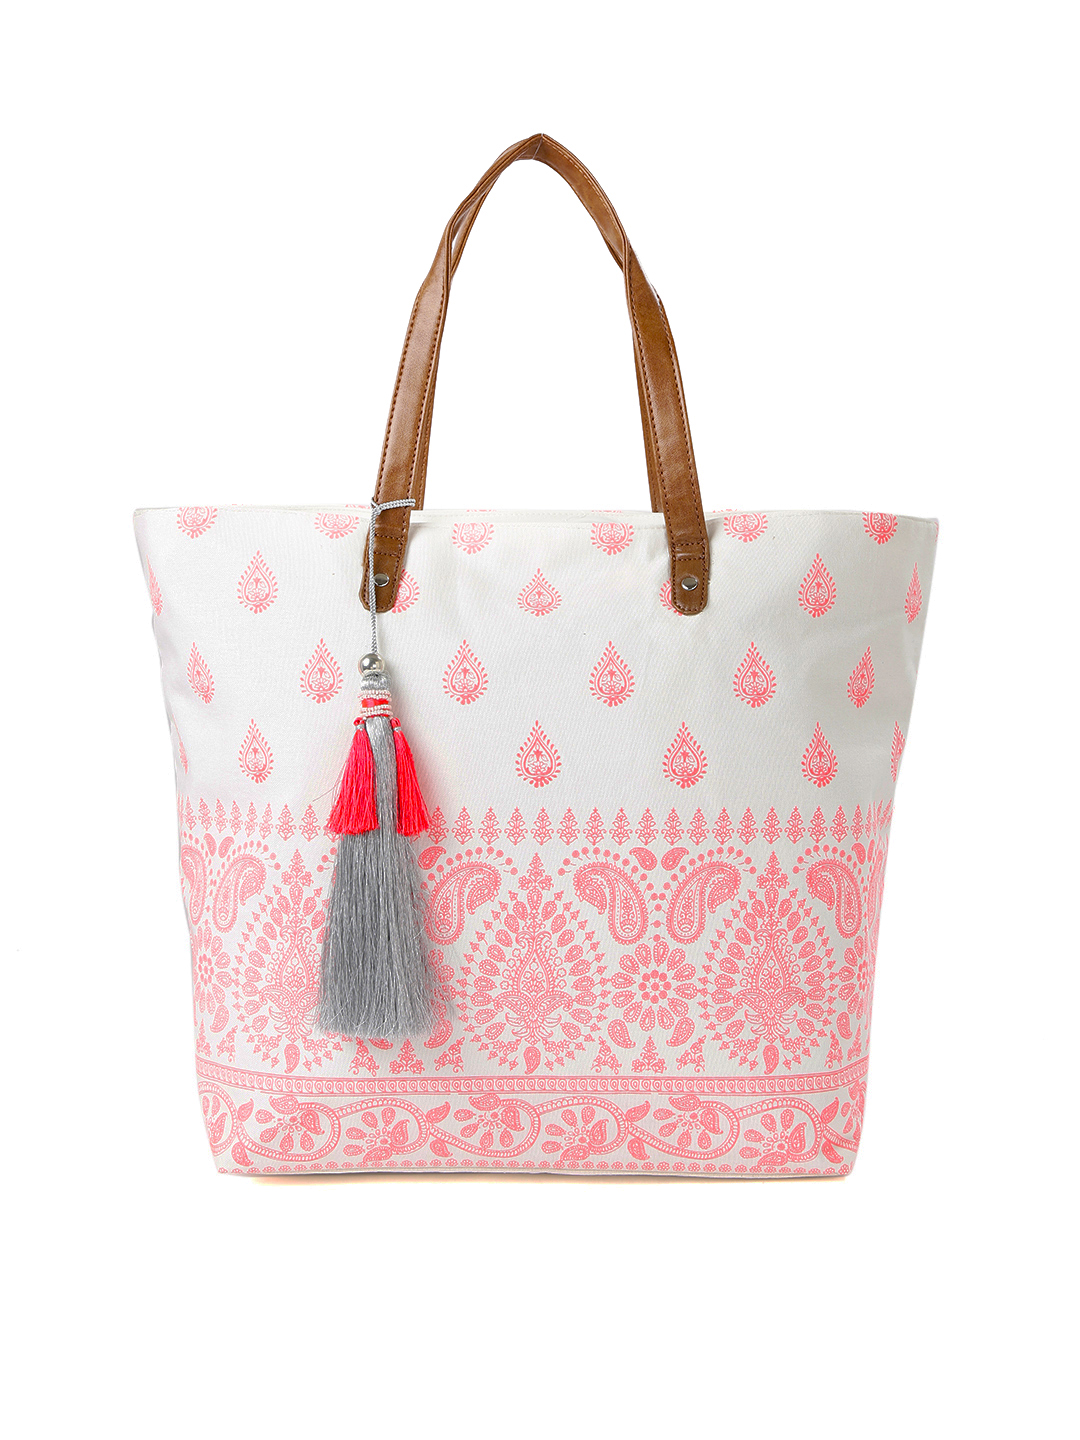 Accessorize Pink & White Printed Shoulder Bag